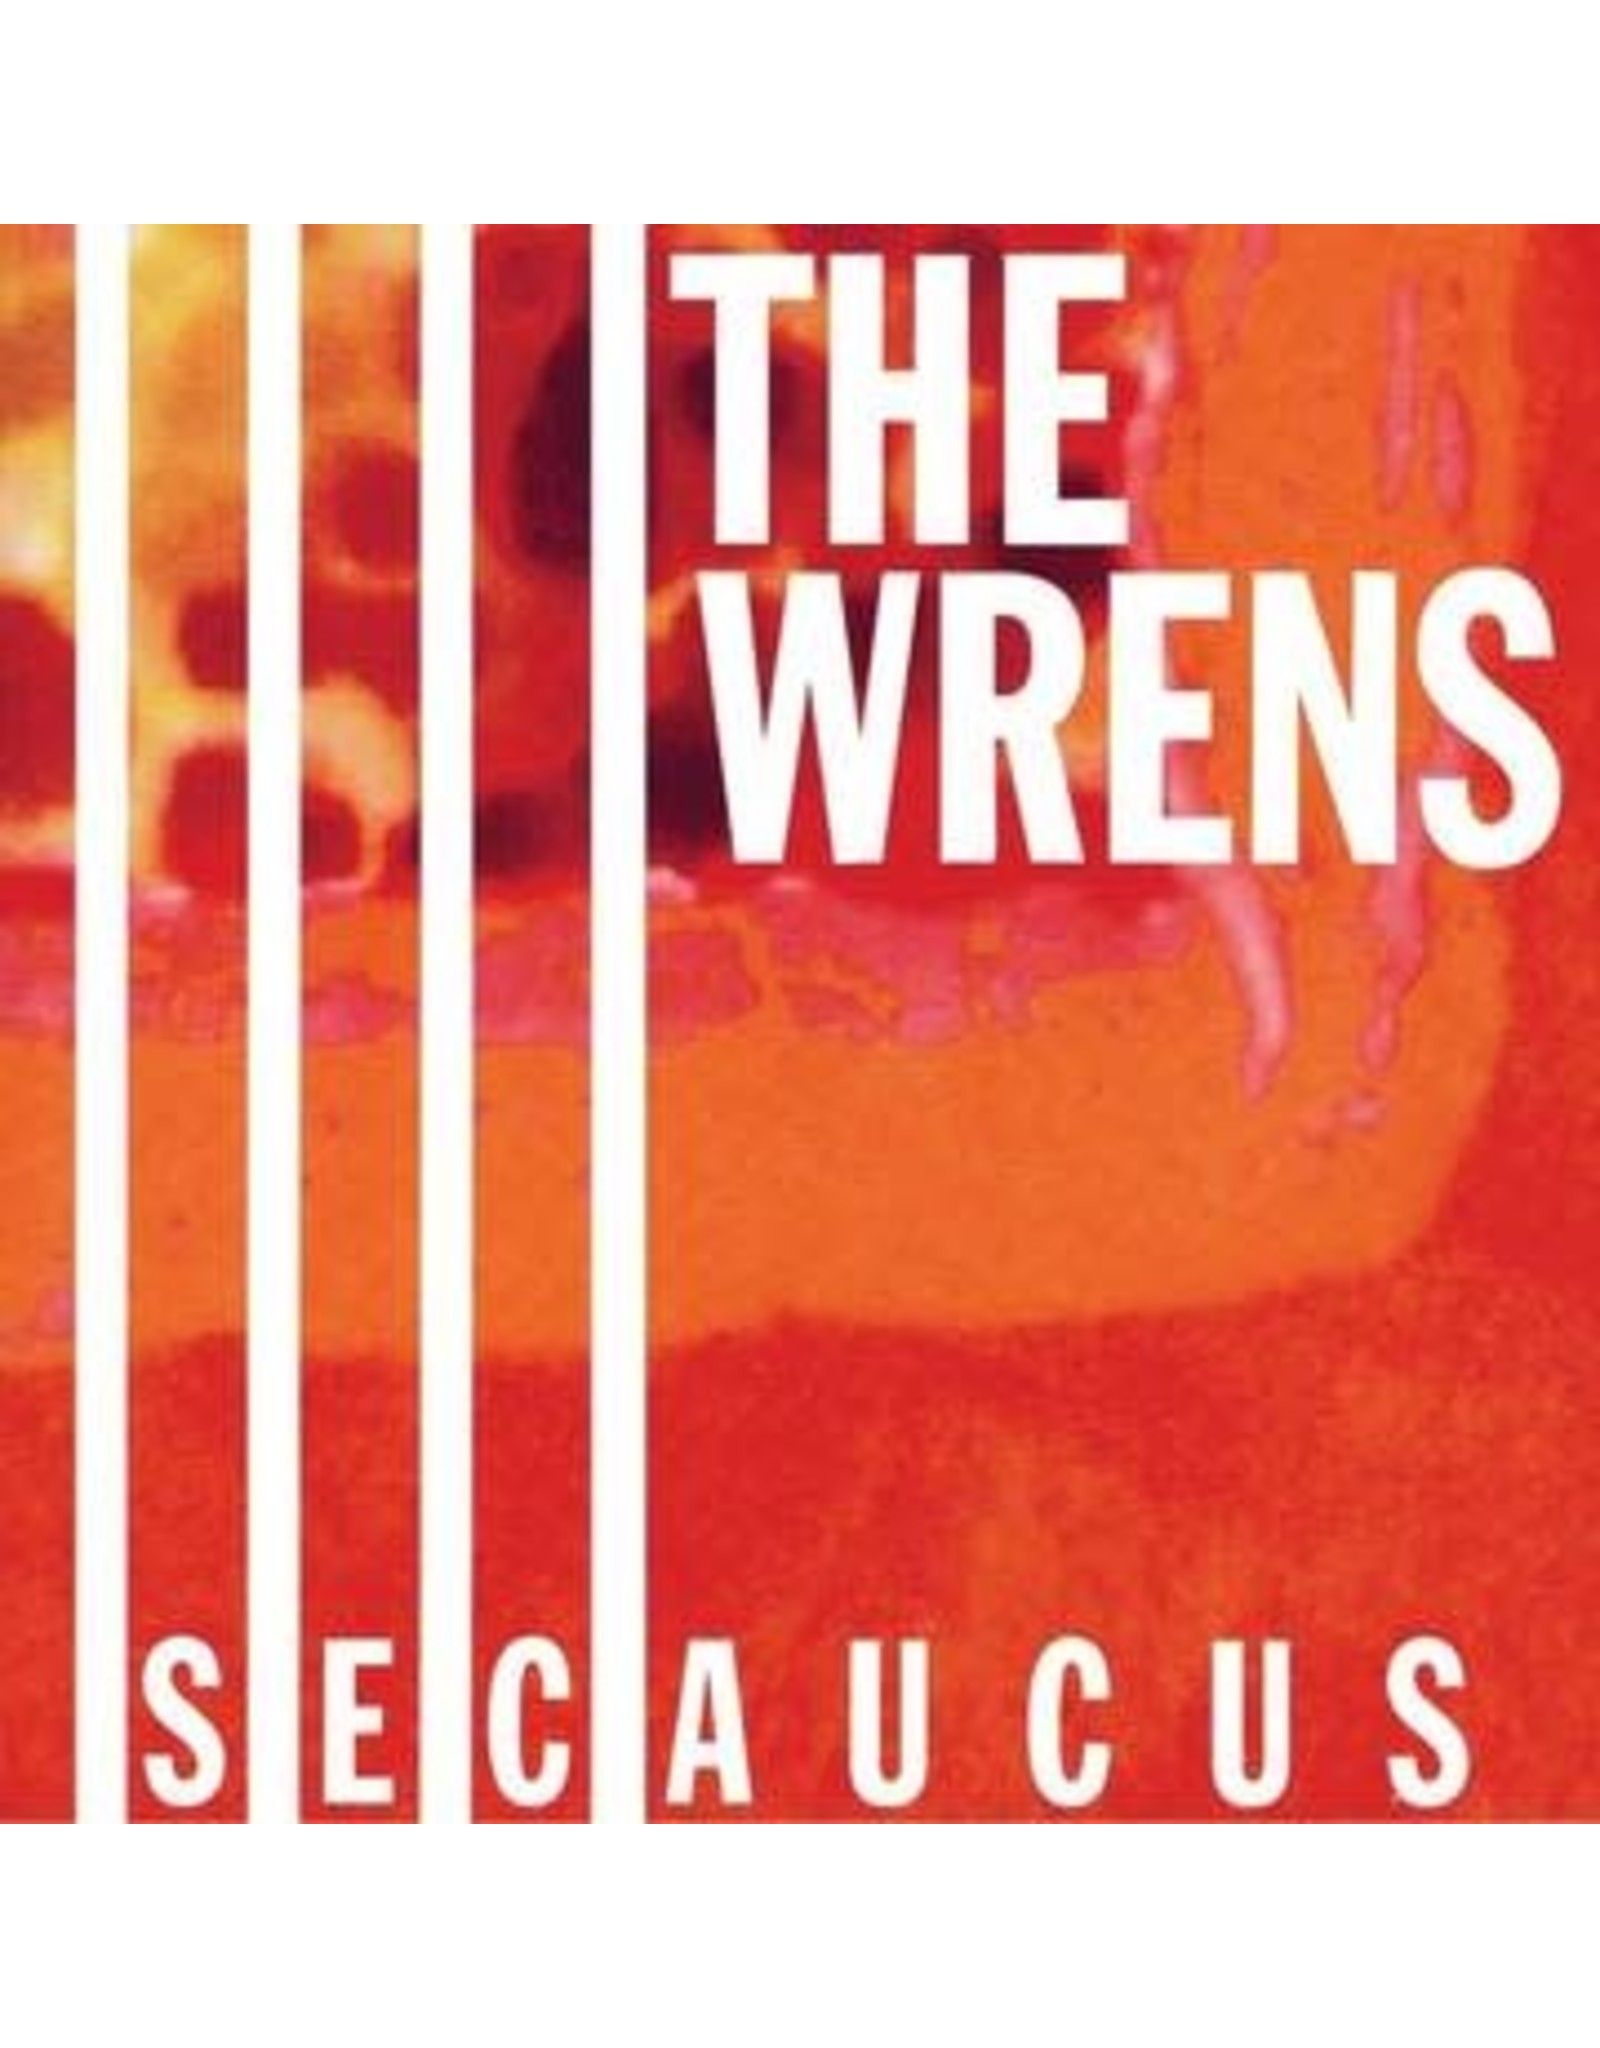 Craft Wrens: 2021BF - Secaucus (2LP/Cherry red opaque/Gatefold/25th ann. reissue) LP